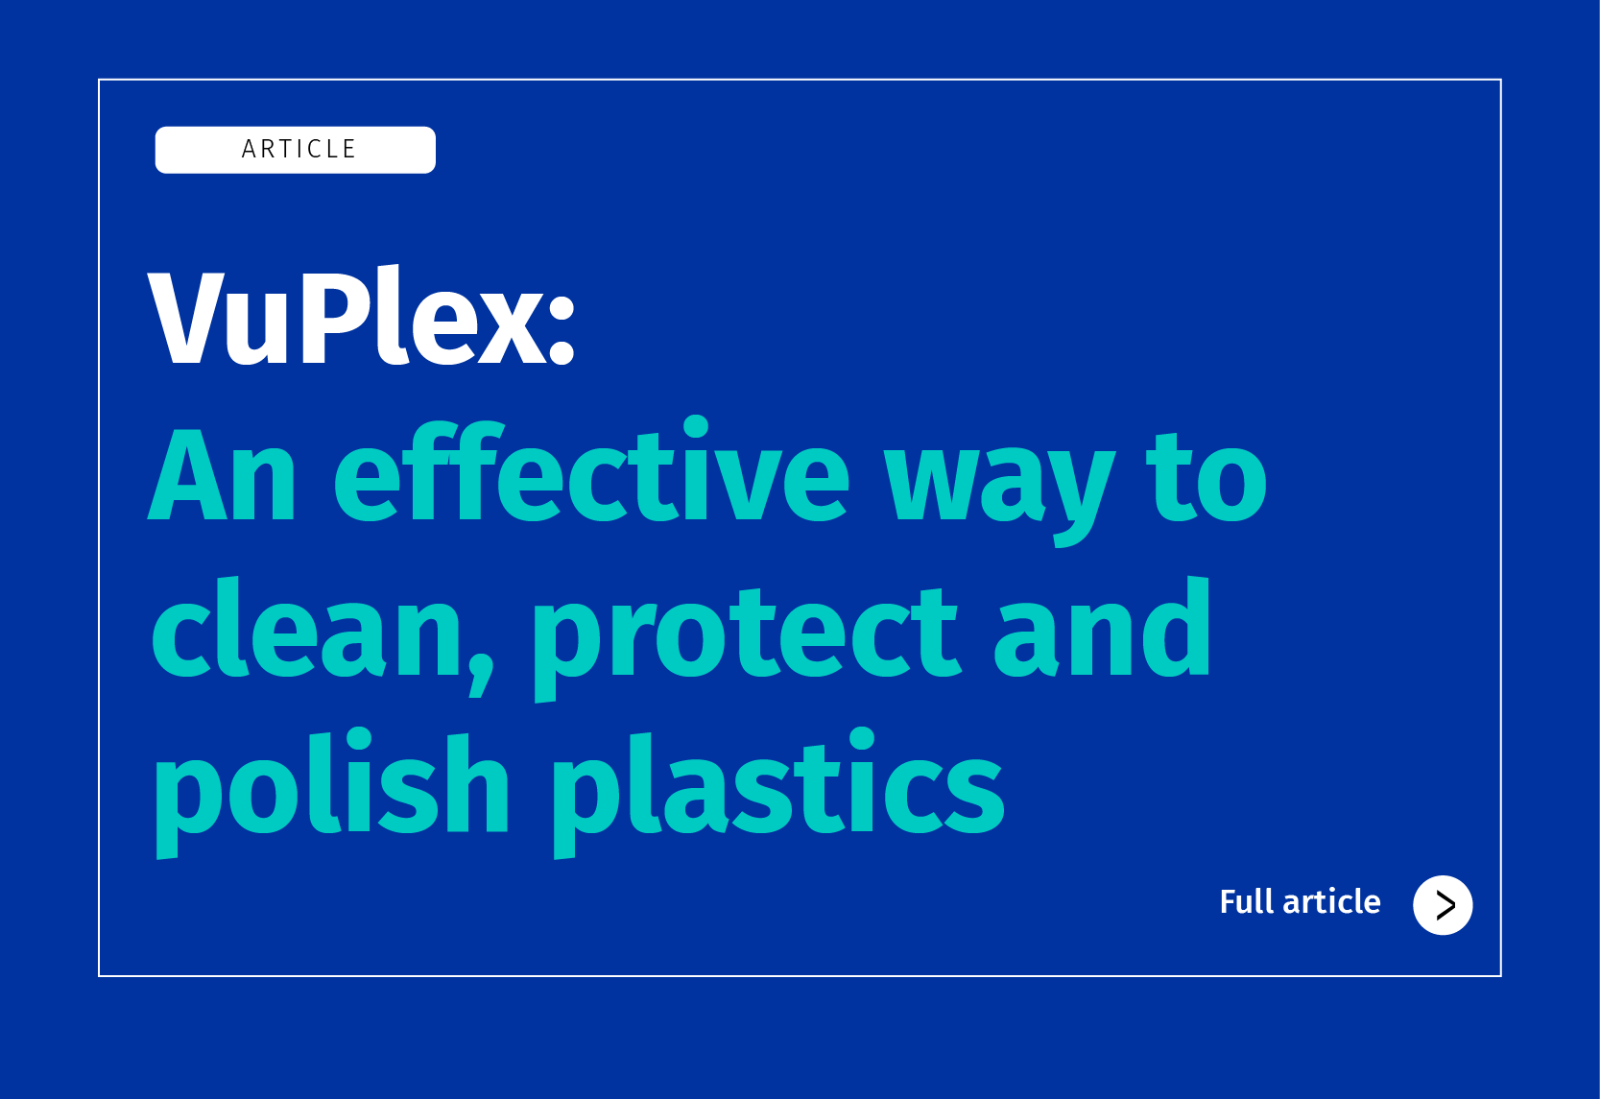 VuPlex: An effective way to clean, protect and polish plastics.